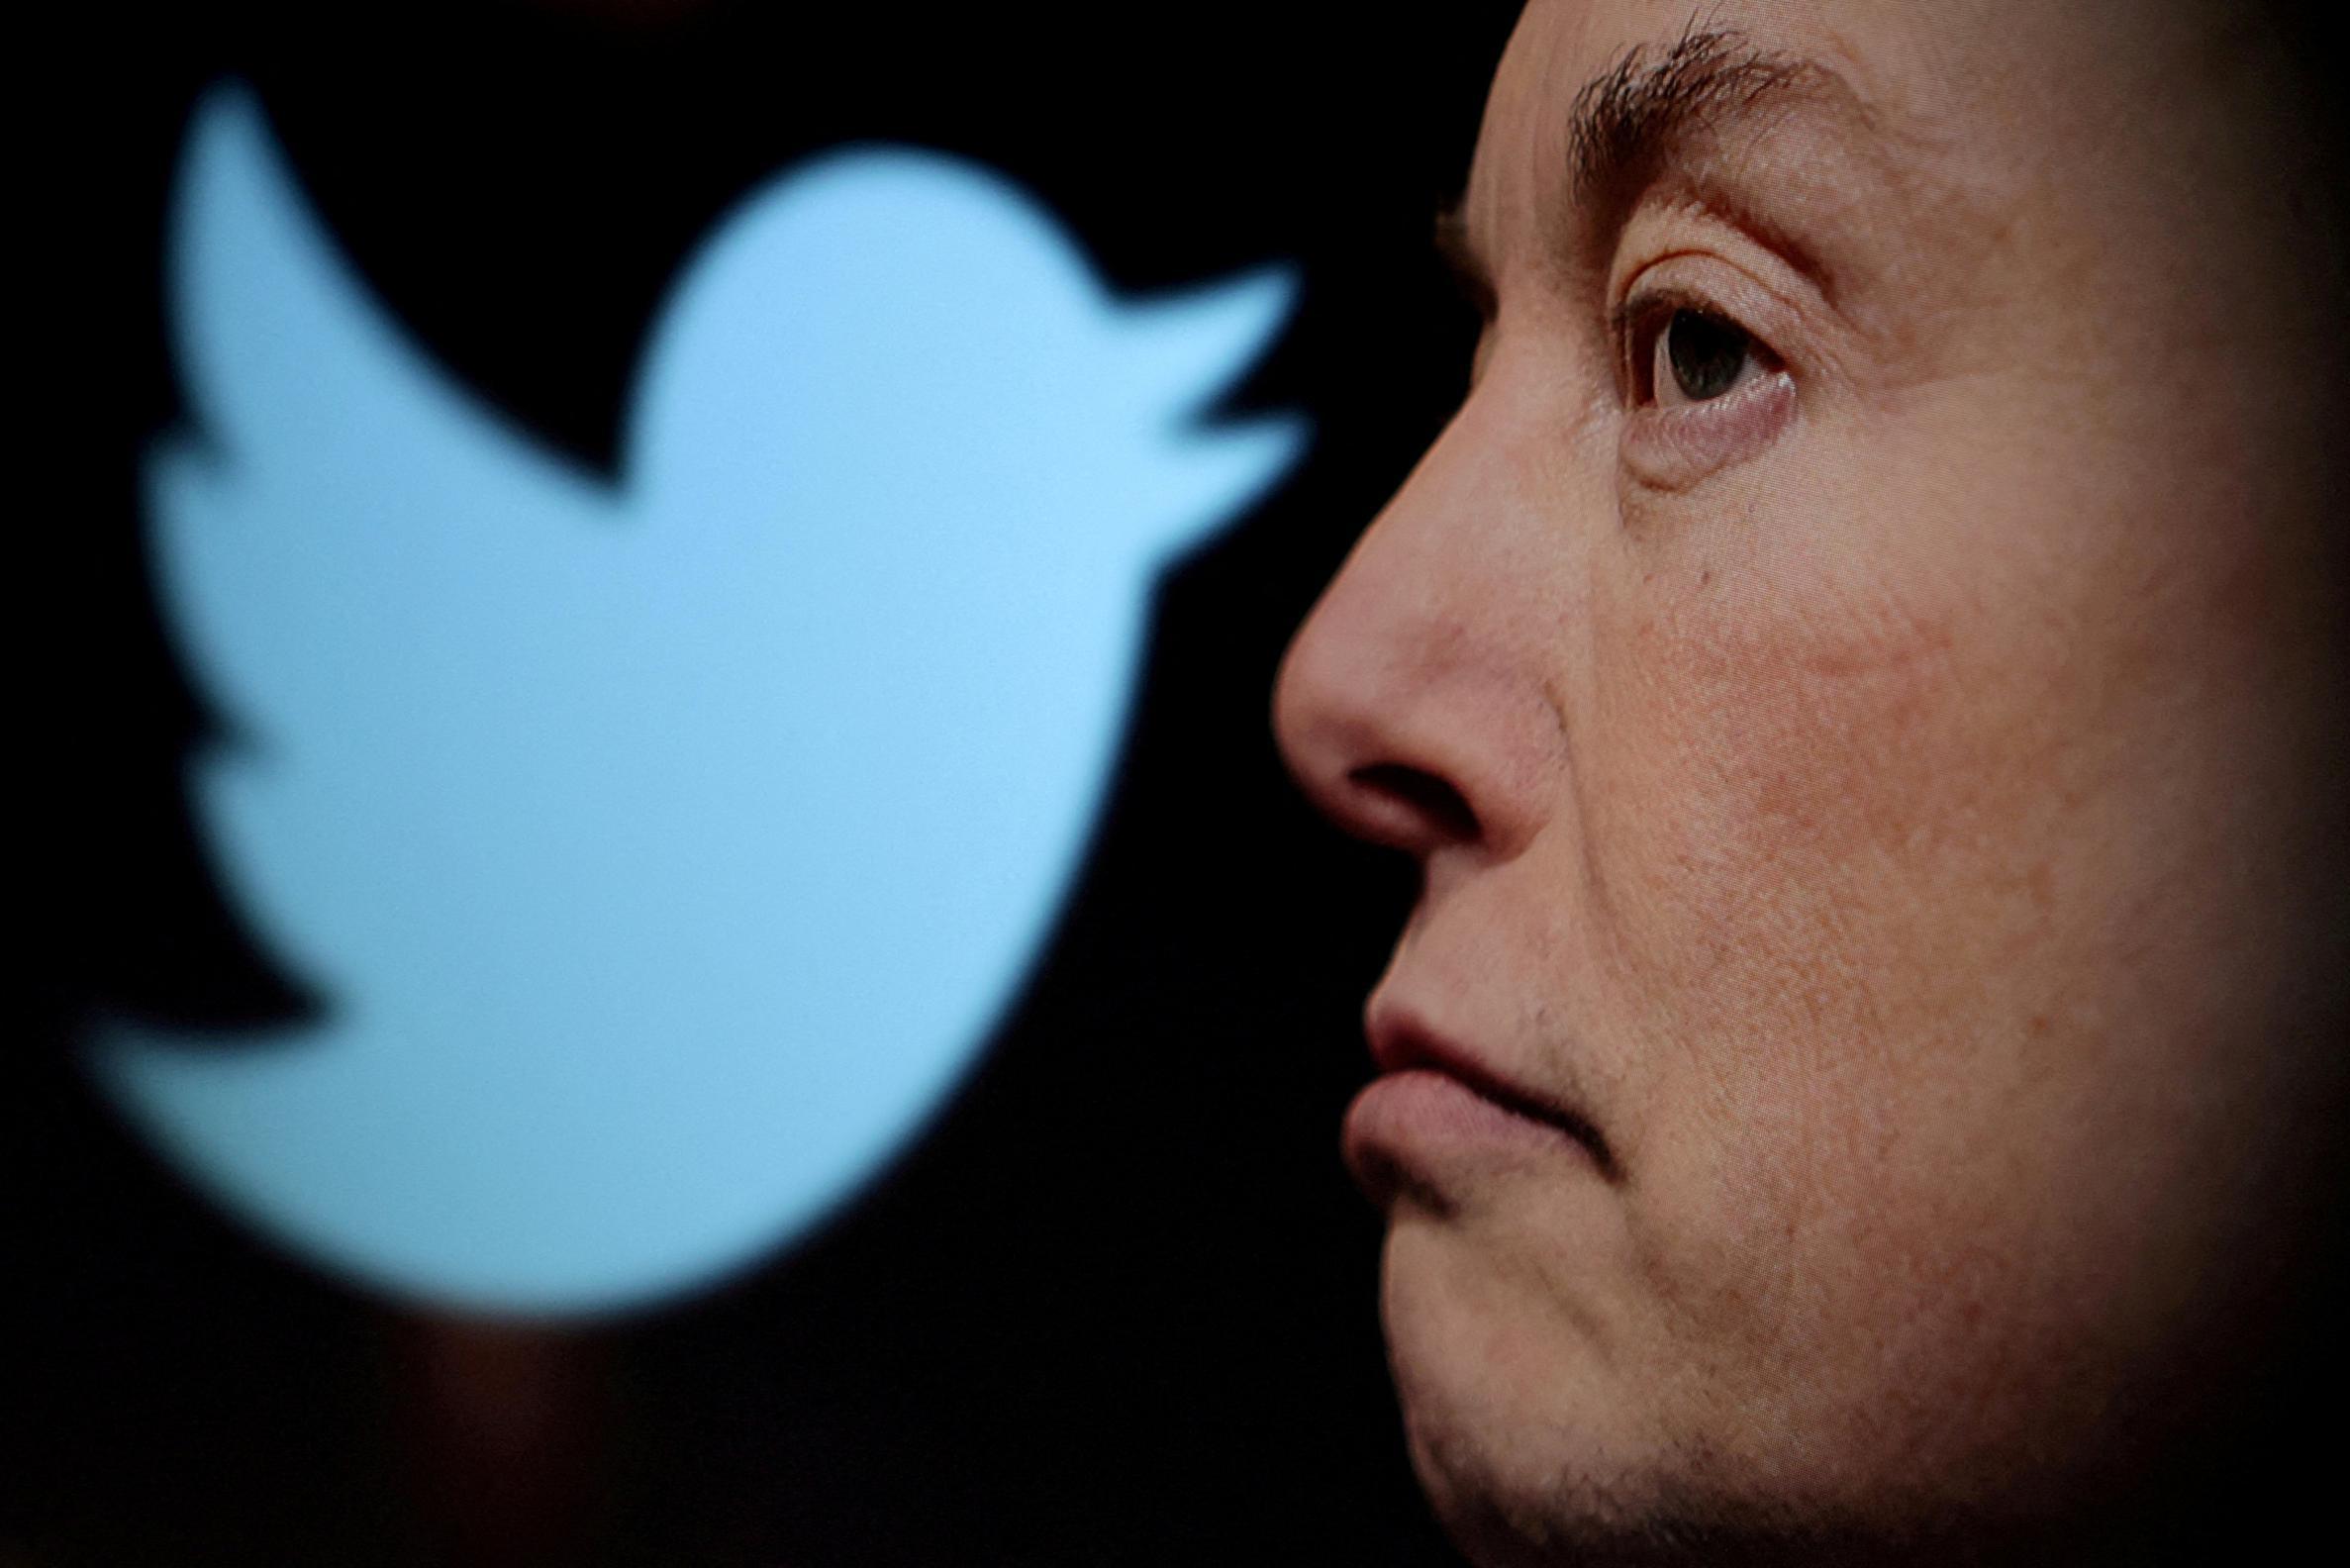 EU threatens to ban Twitter if Musk breaks moderation rules